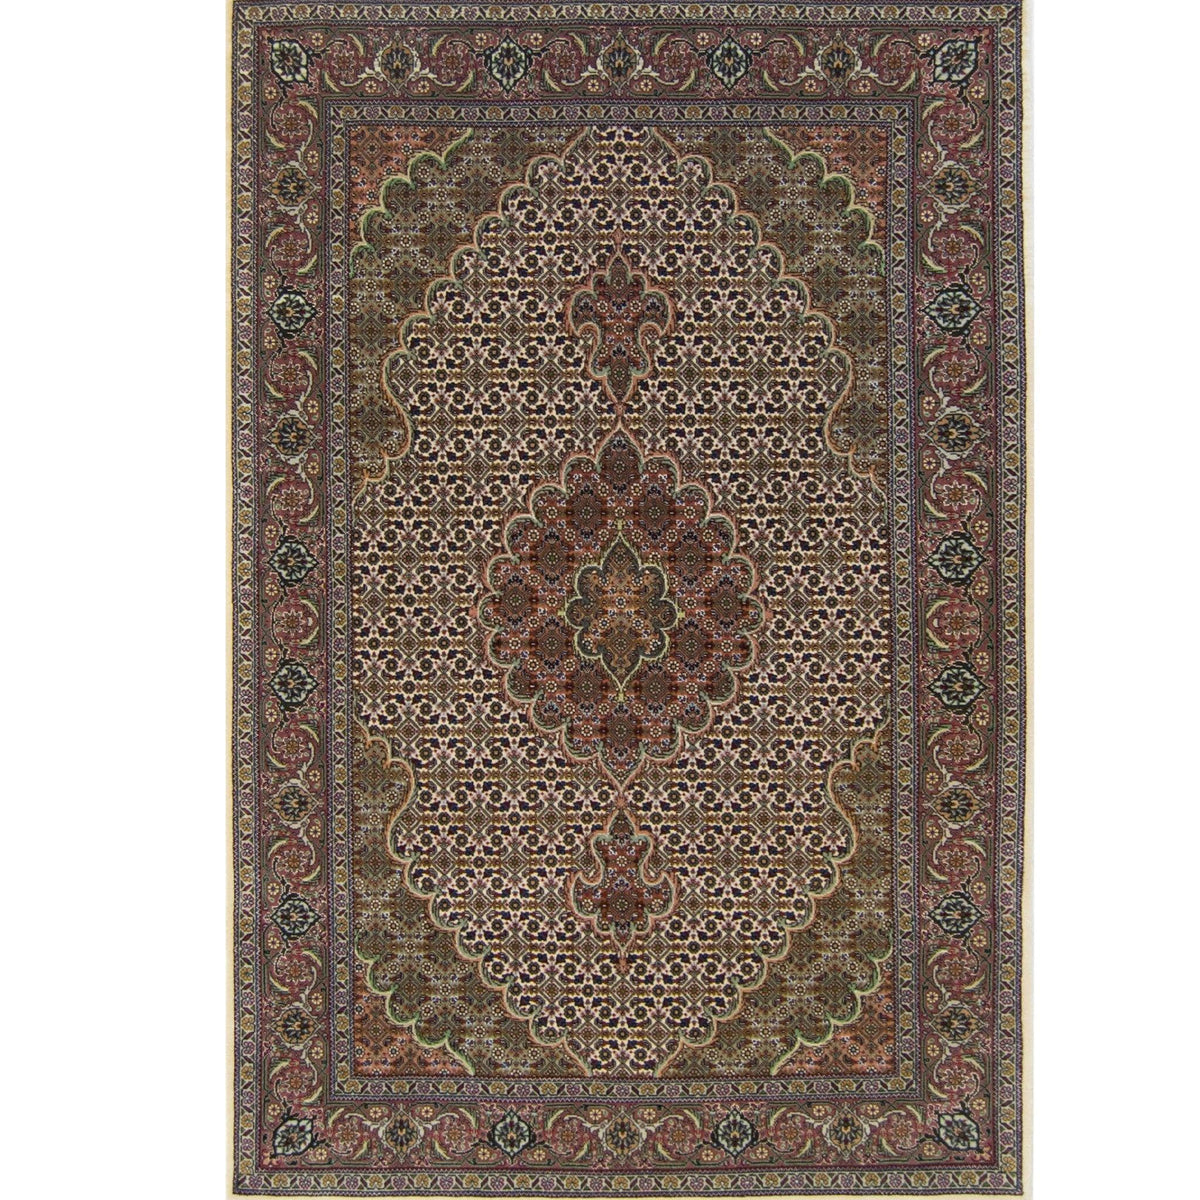 Super Fine Hand-knotted Persian Wool and Silk Tabriz - Mahi Design Rug 100cm x 150cm